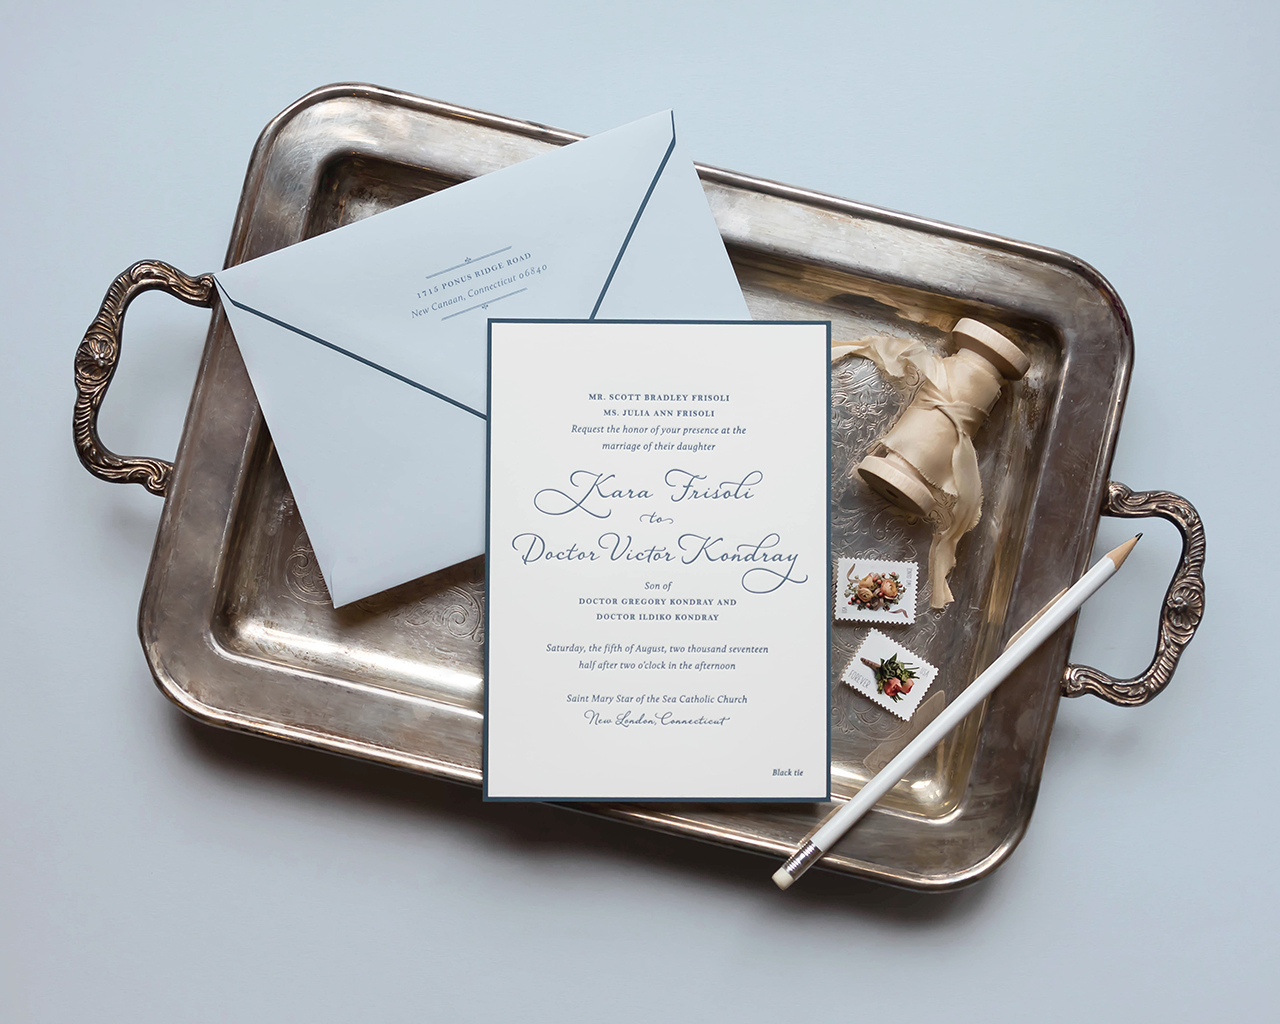 Classic ocean inspired wedding invitations in blue & grey